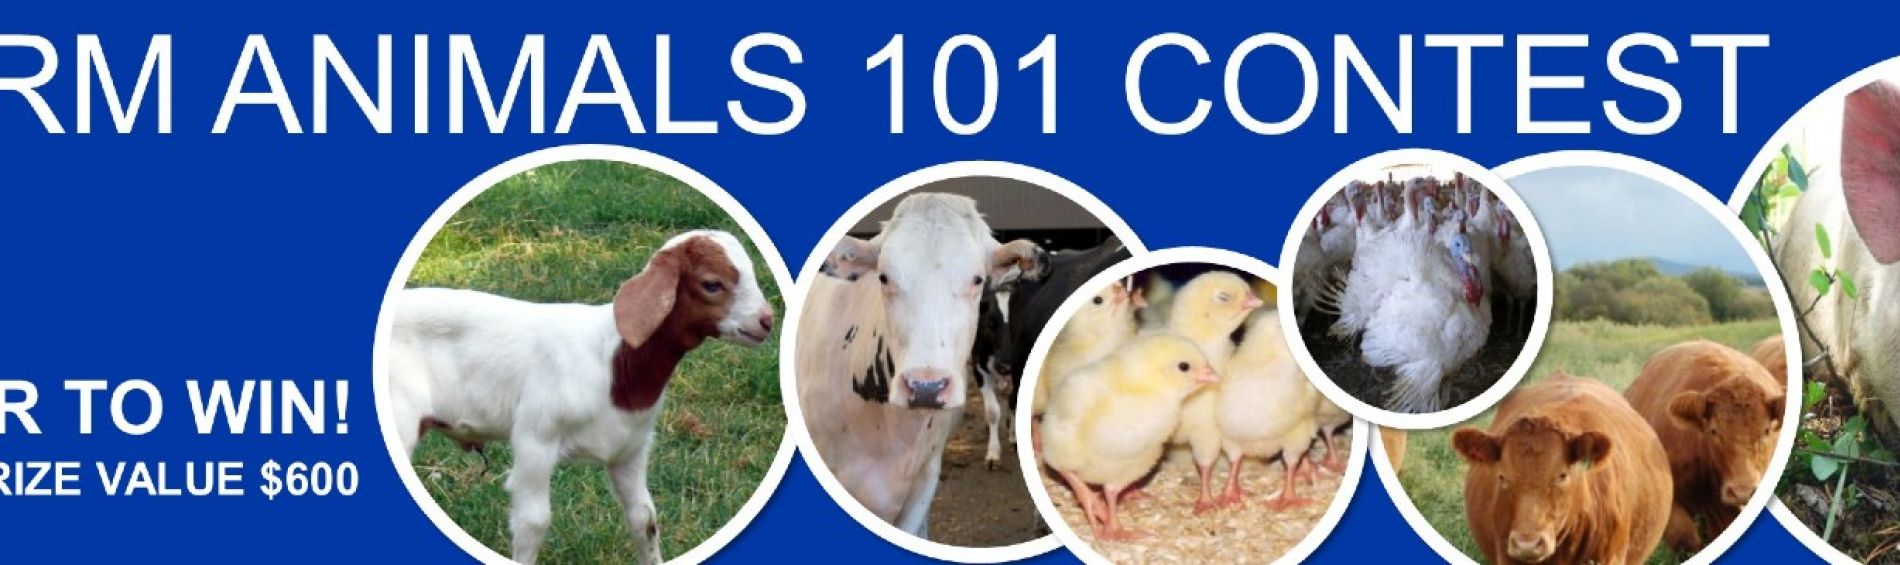 Farm Animals 101 Contest